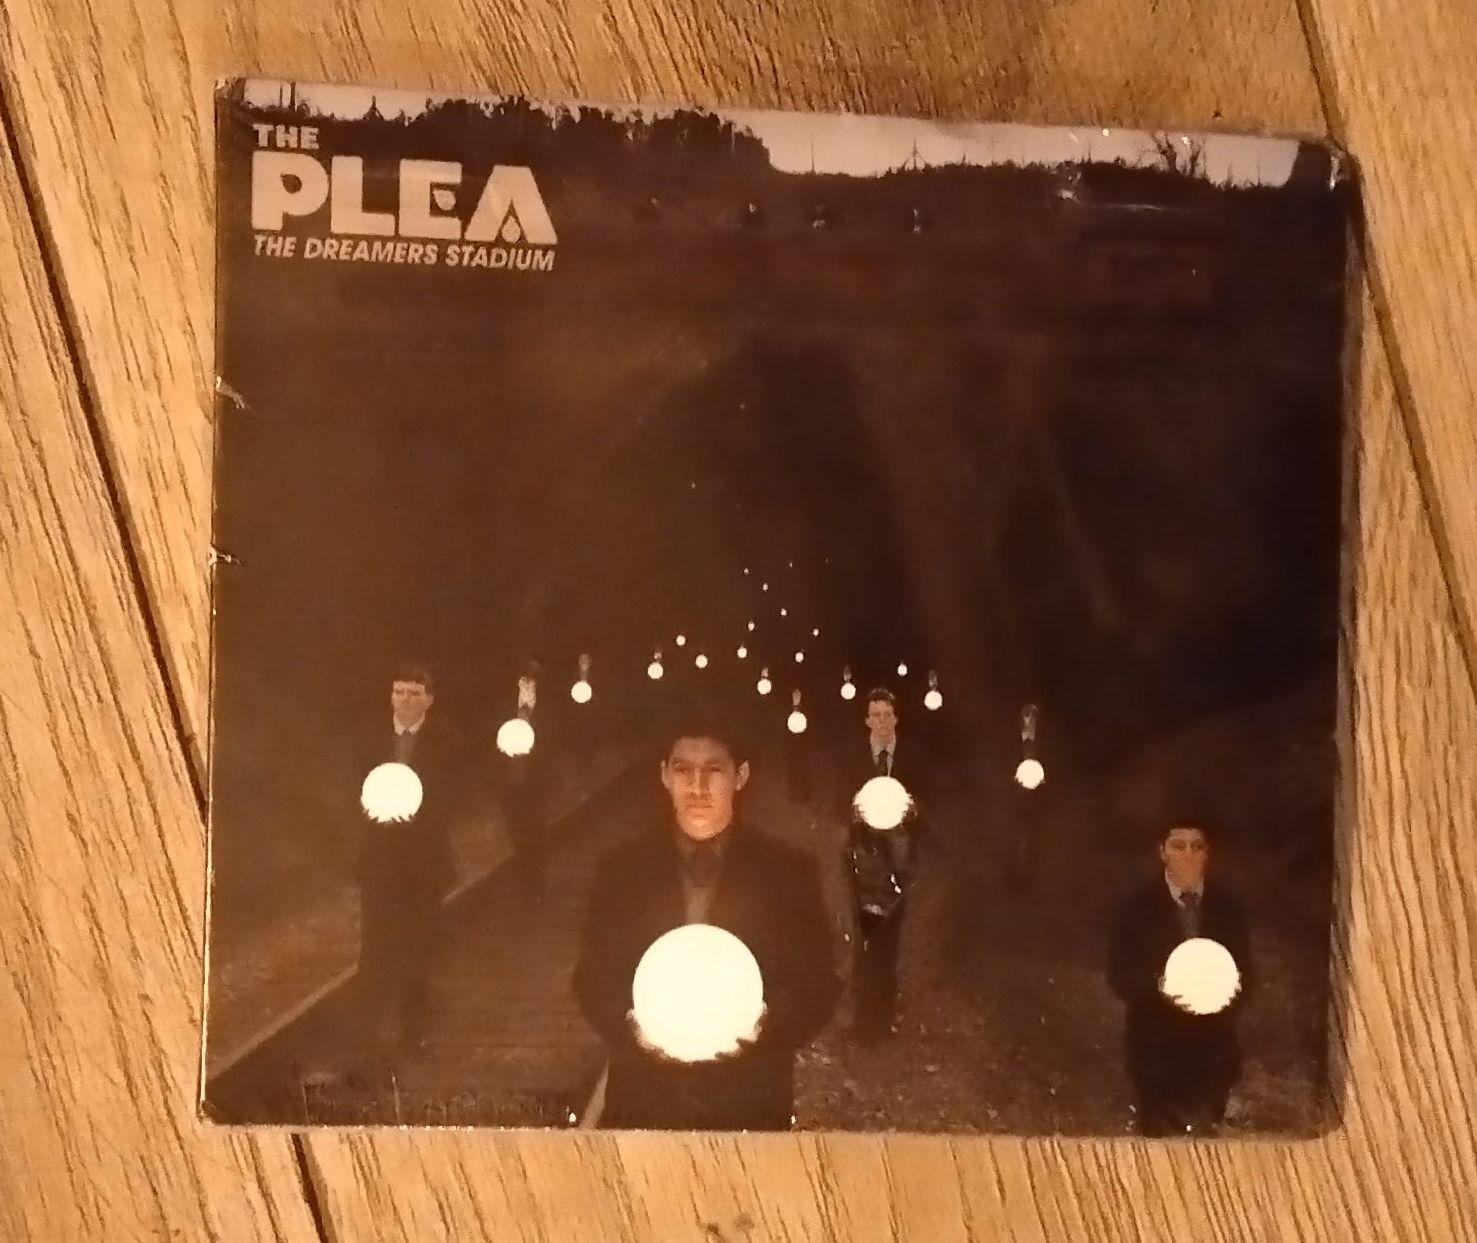 The Plea the dreamers stadium rock CD